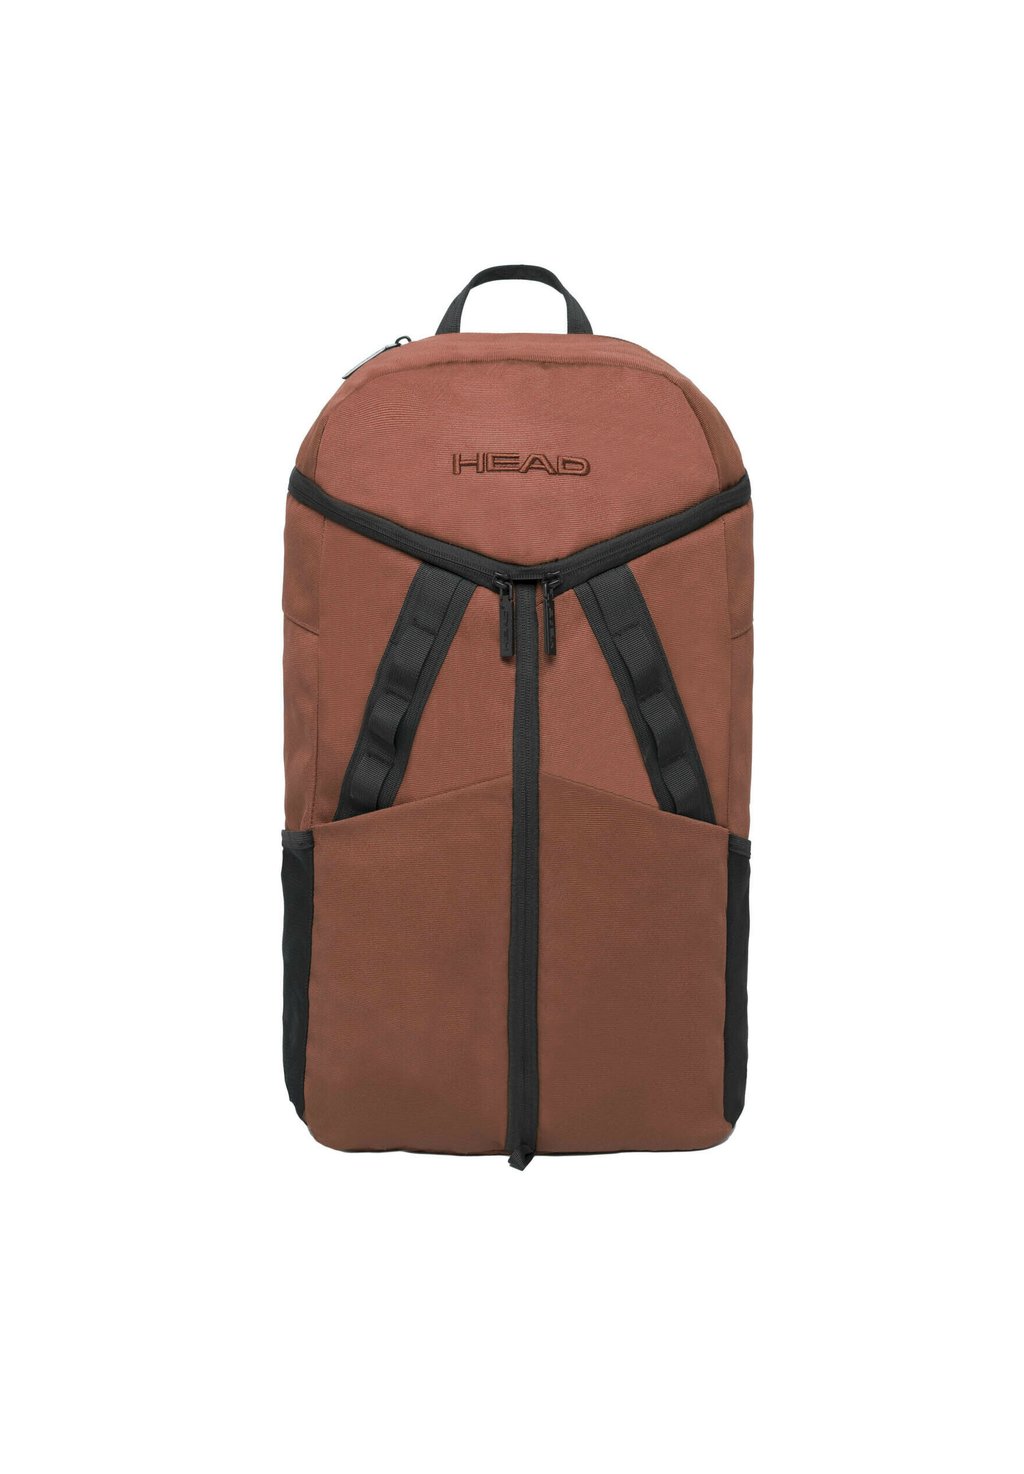 Рюкзак для путешествий Head Point Y, коричневый рюкзак head core черный белый 283421 bkwh